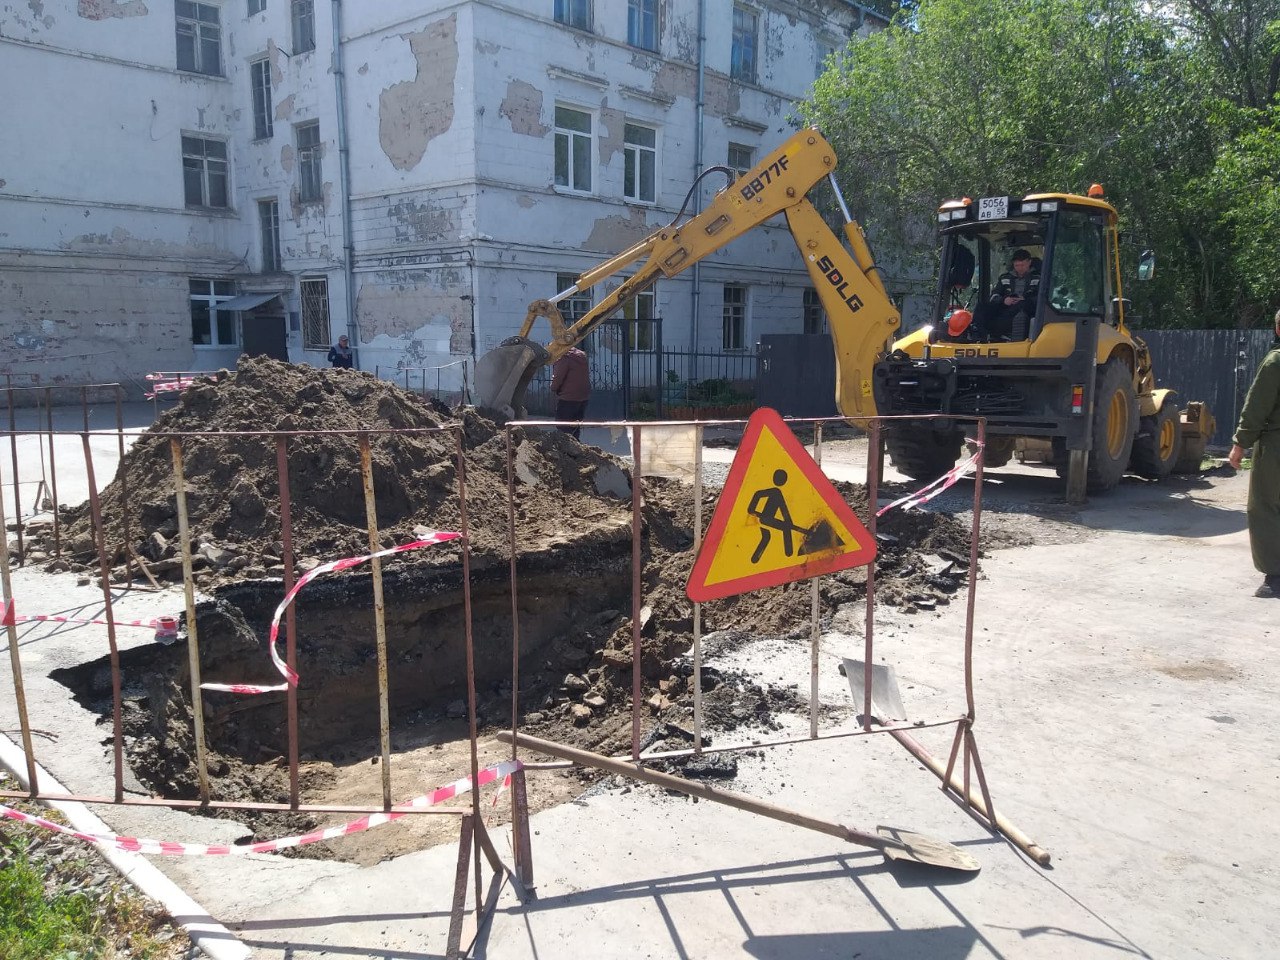 Кого наказали за падение ребенка в яму с кипятком в центре Омска? #Новости #Общество #Омск